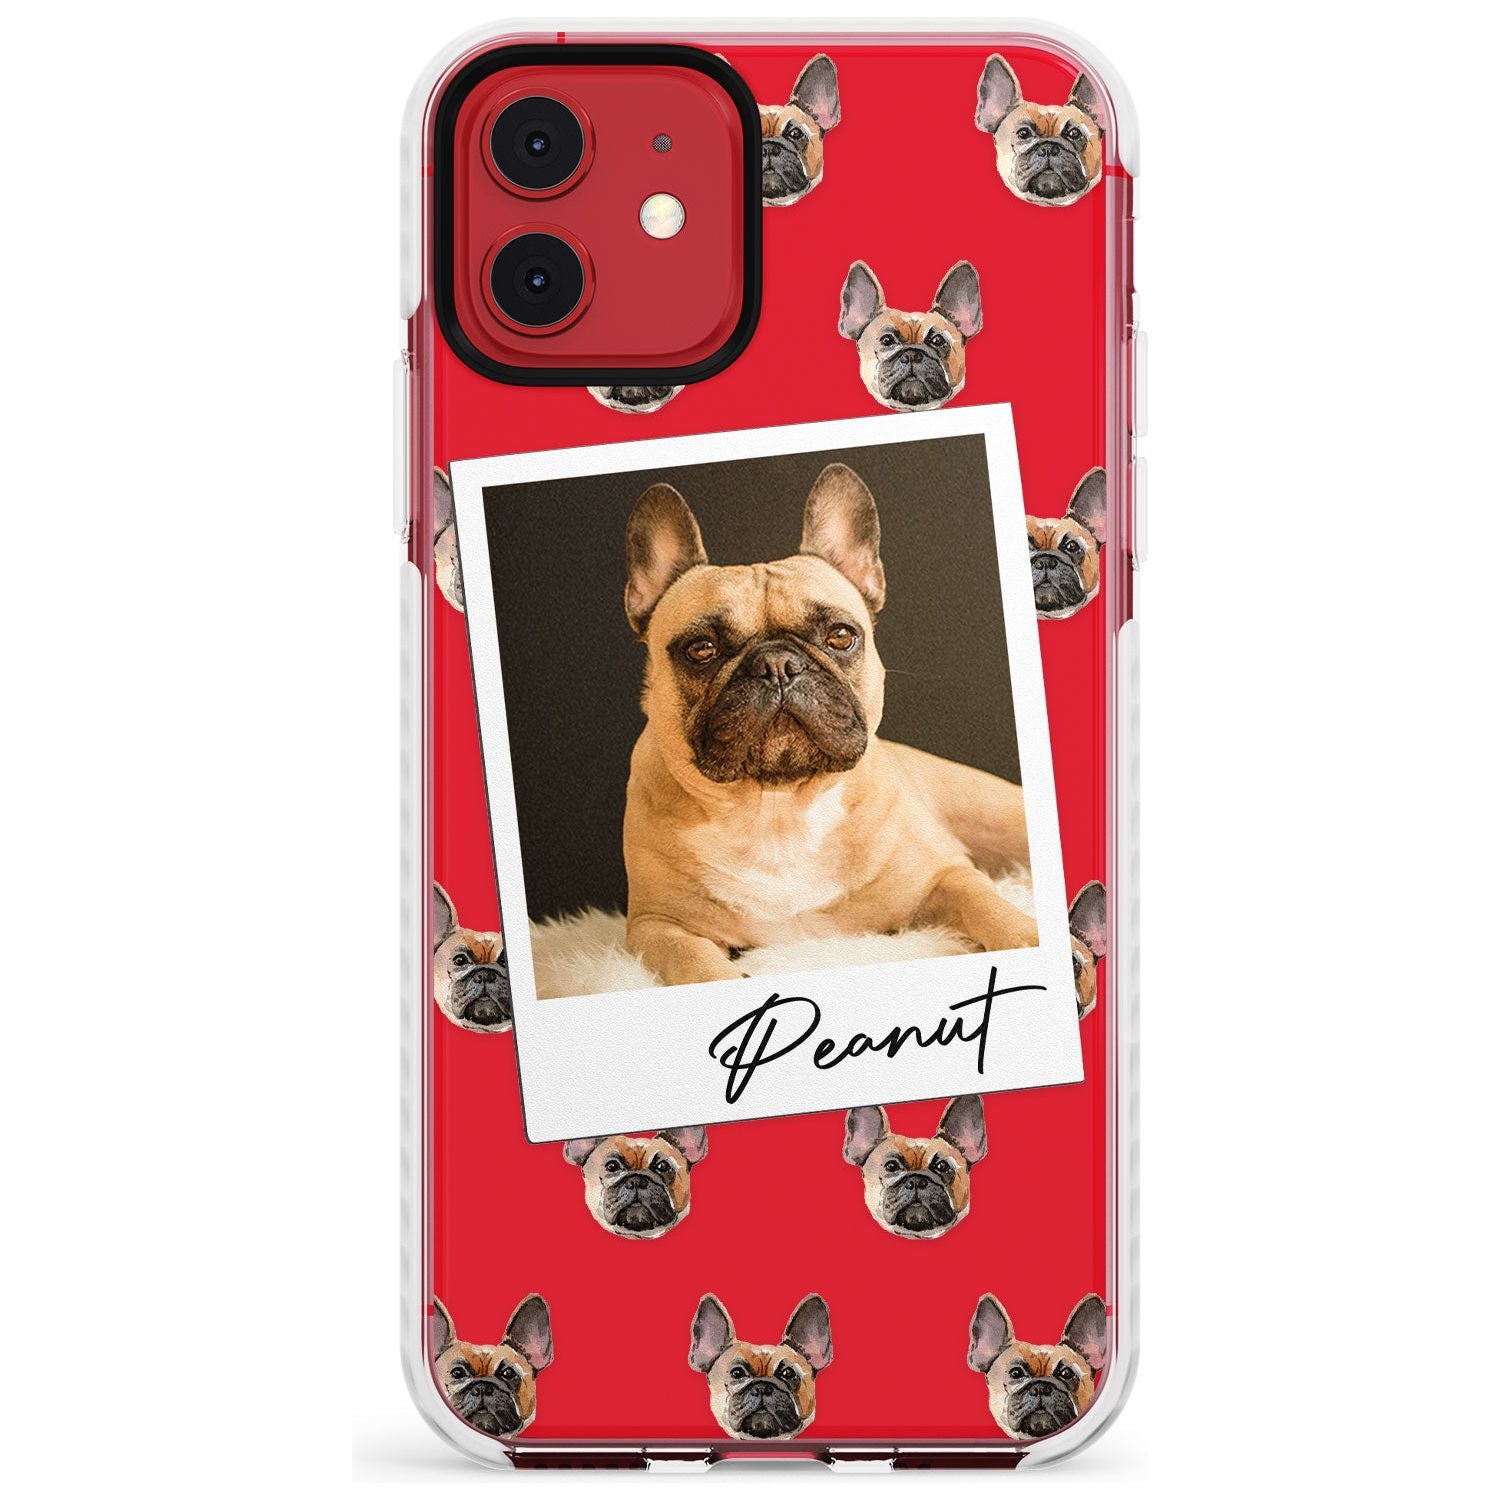 French Bulldog, Tan - Custom Dog Photo Slim TPU Phone Case for iPhone 11